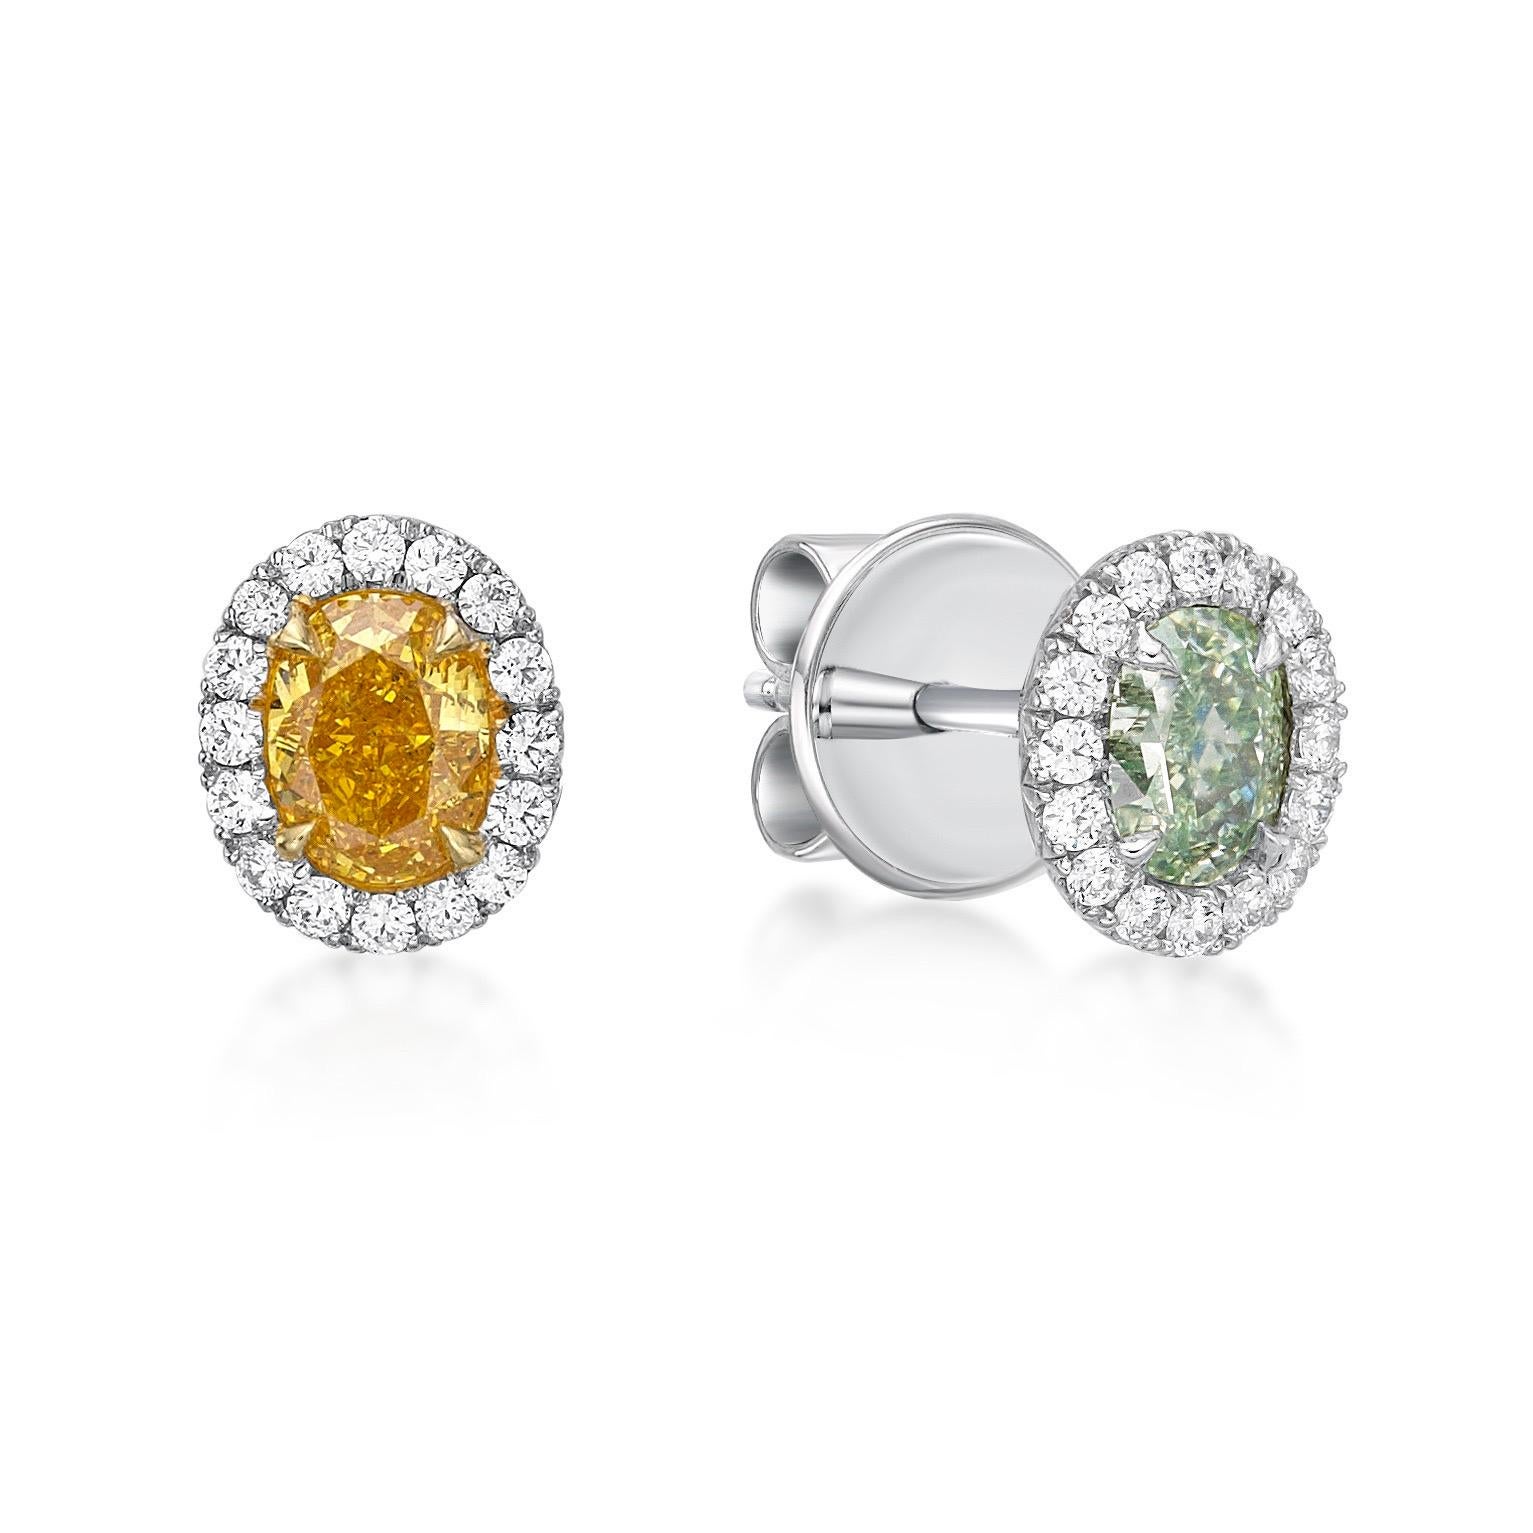 Oval Cut Emilio Jewelry 0.91 Carat Fancy Yellow And Light Green Oval Diamond Studs